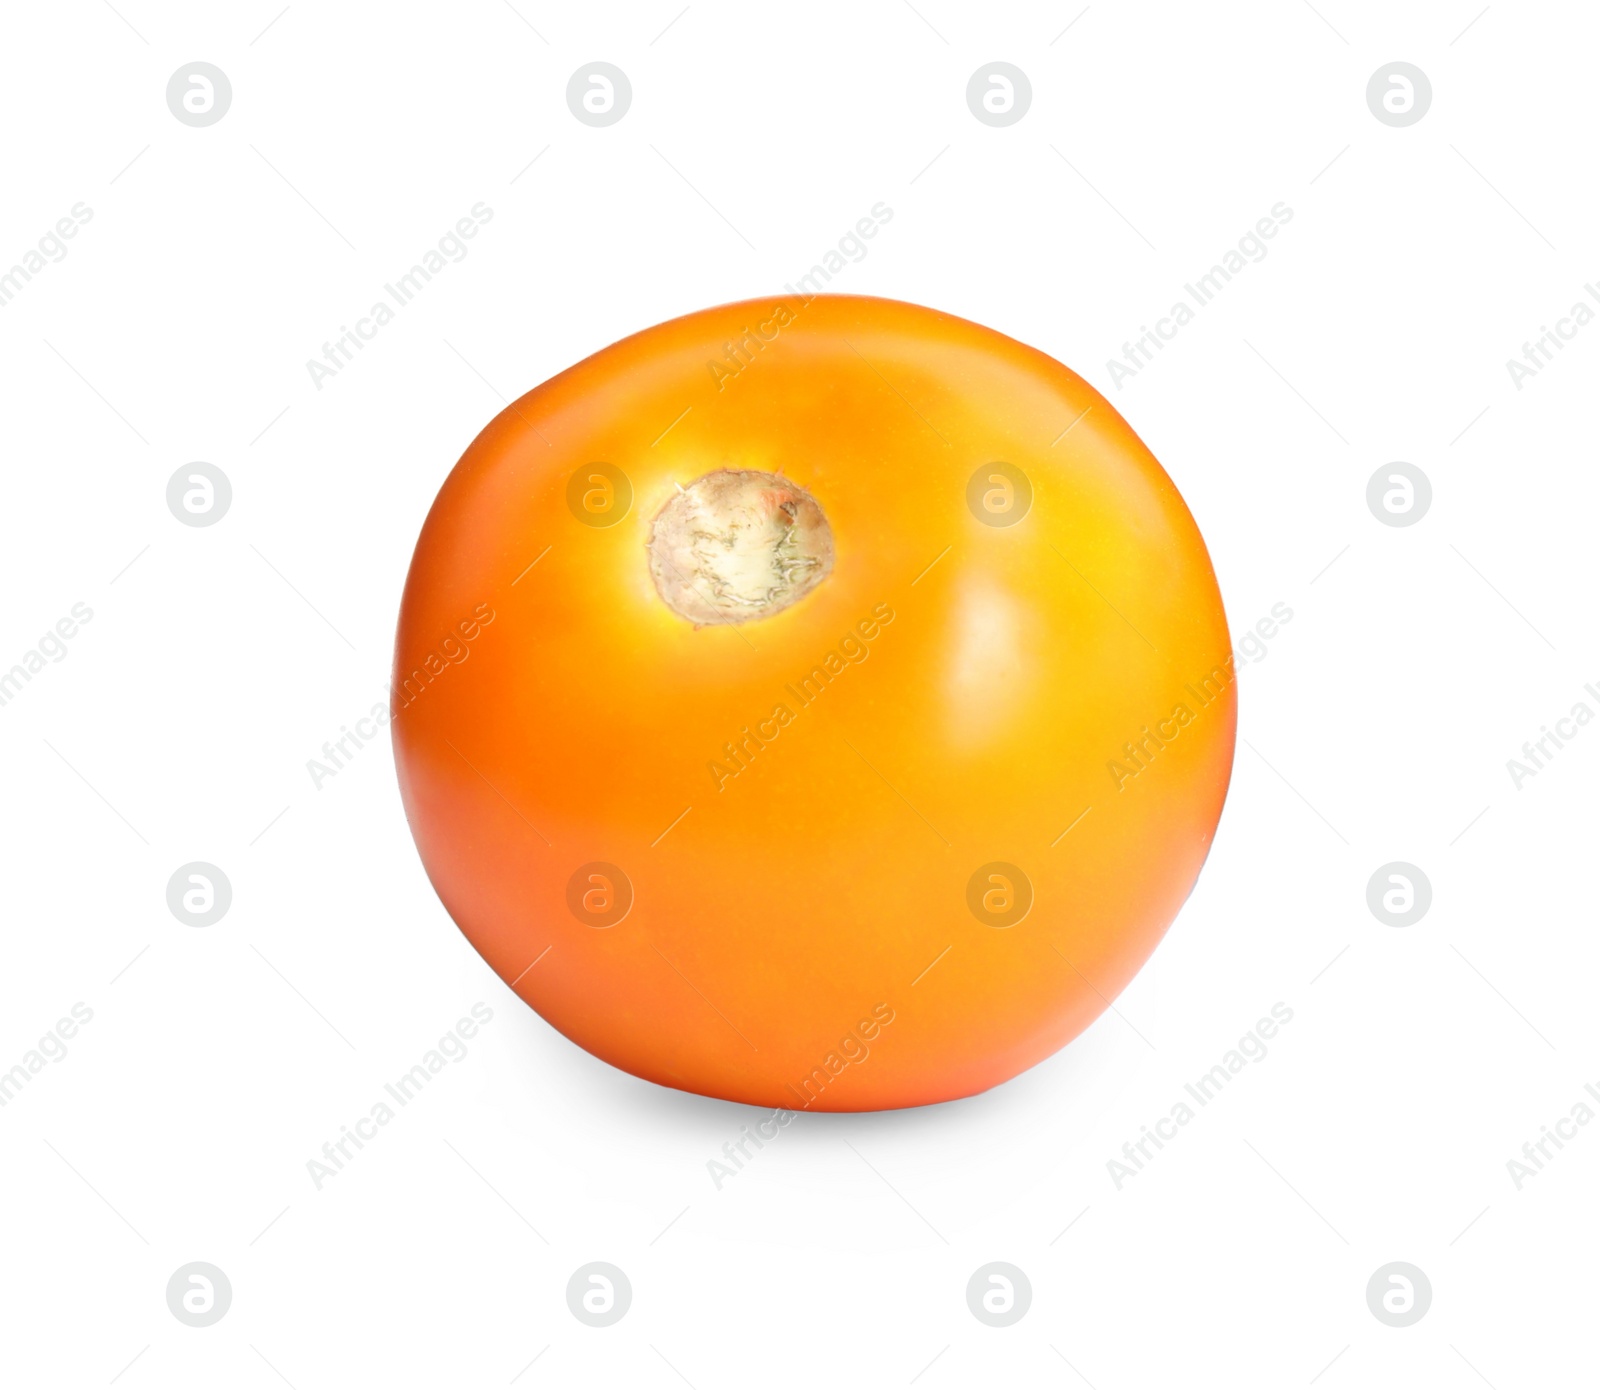 Photo of Whole ripe yellow tomato isolated on white